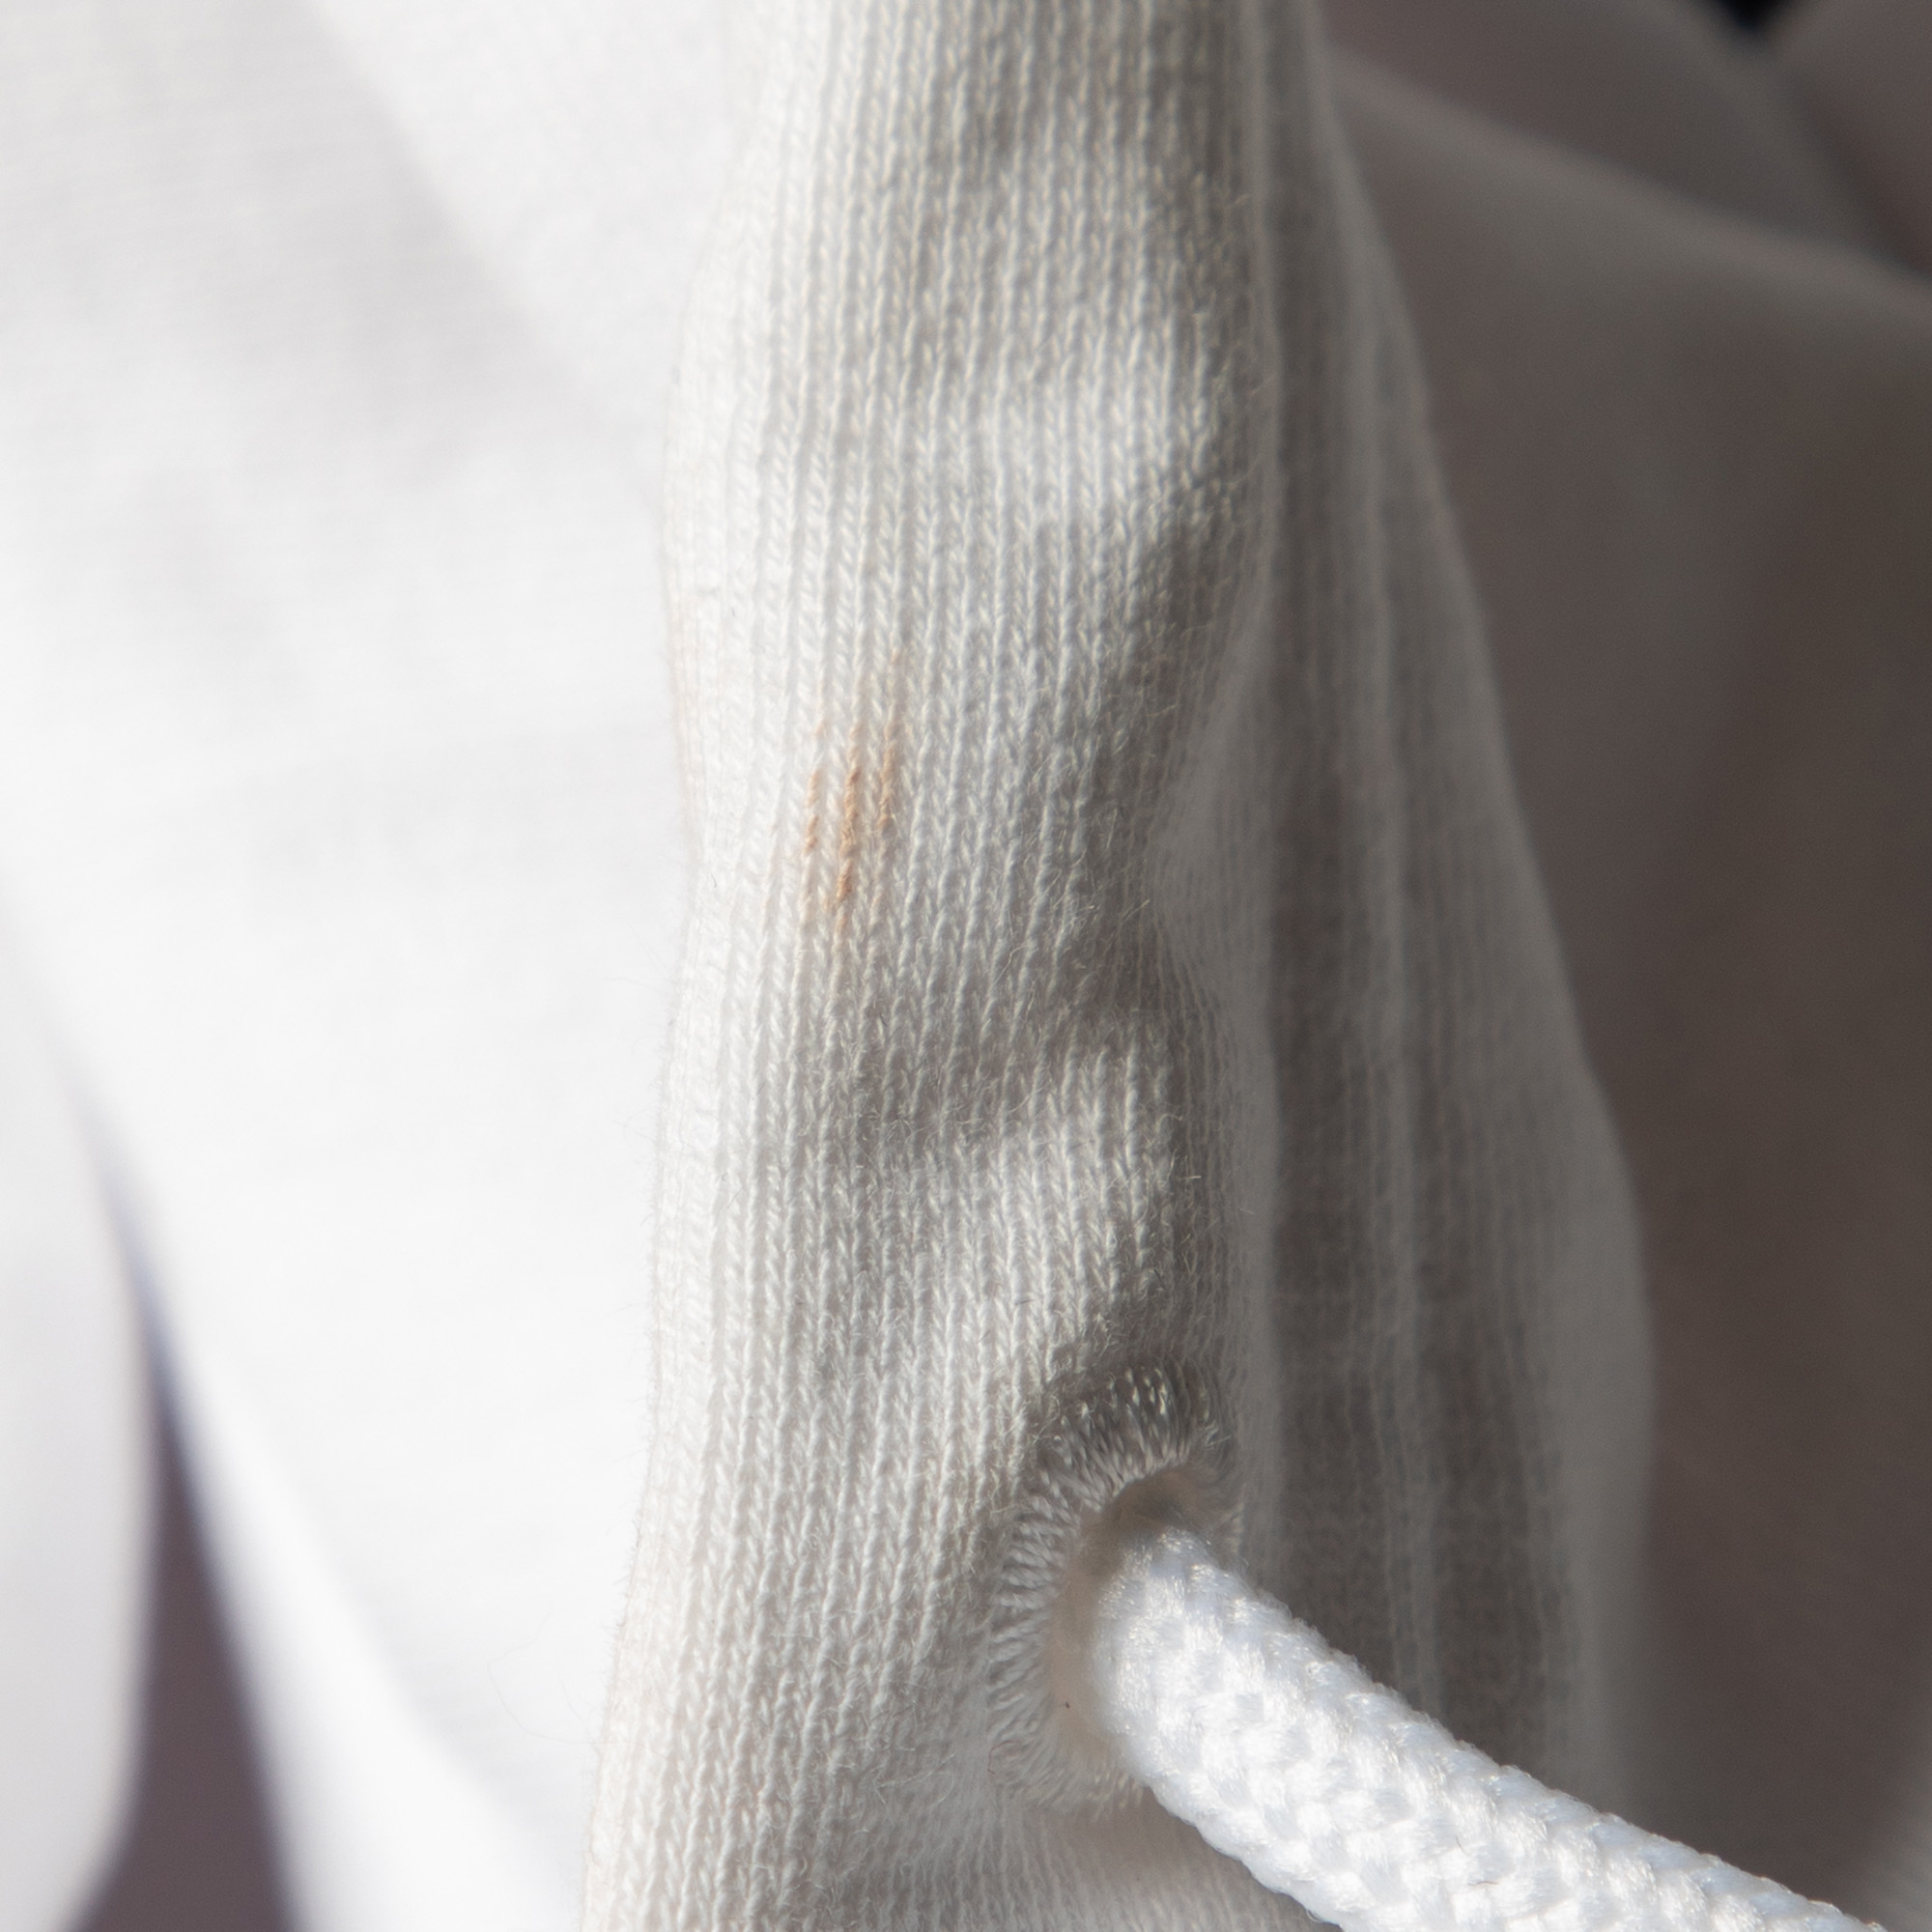 Balenciaga White Logo Print Cotton Hooded Sweatshirt M